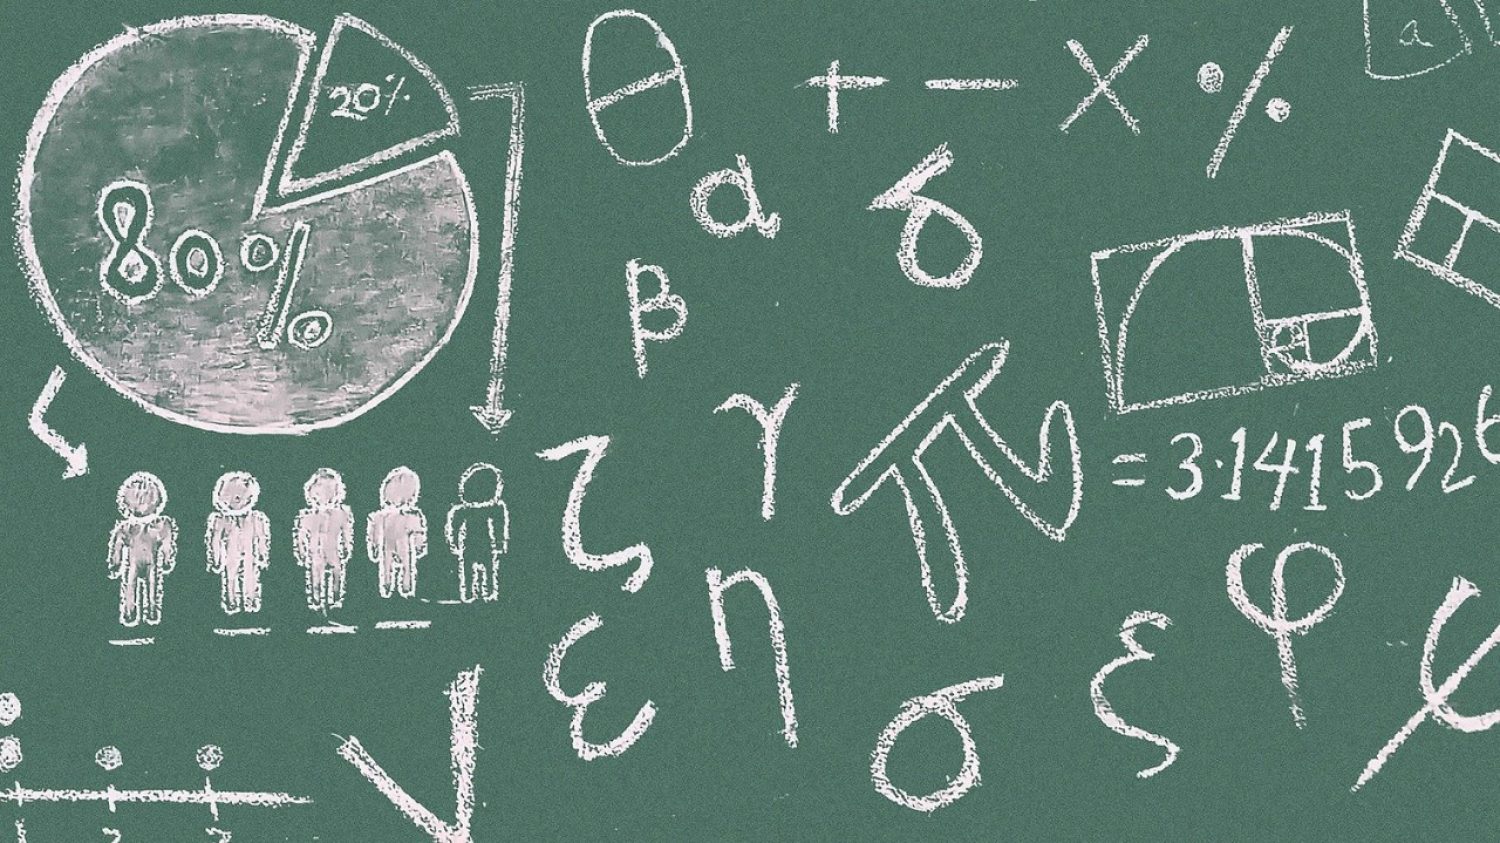 A chalkboard showing math problems